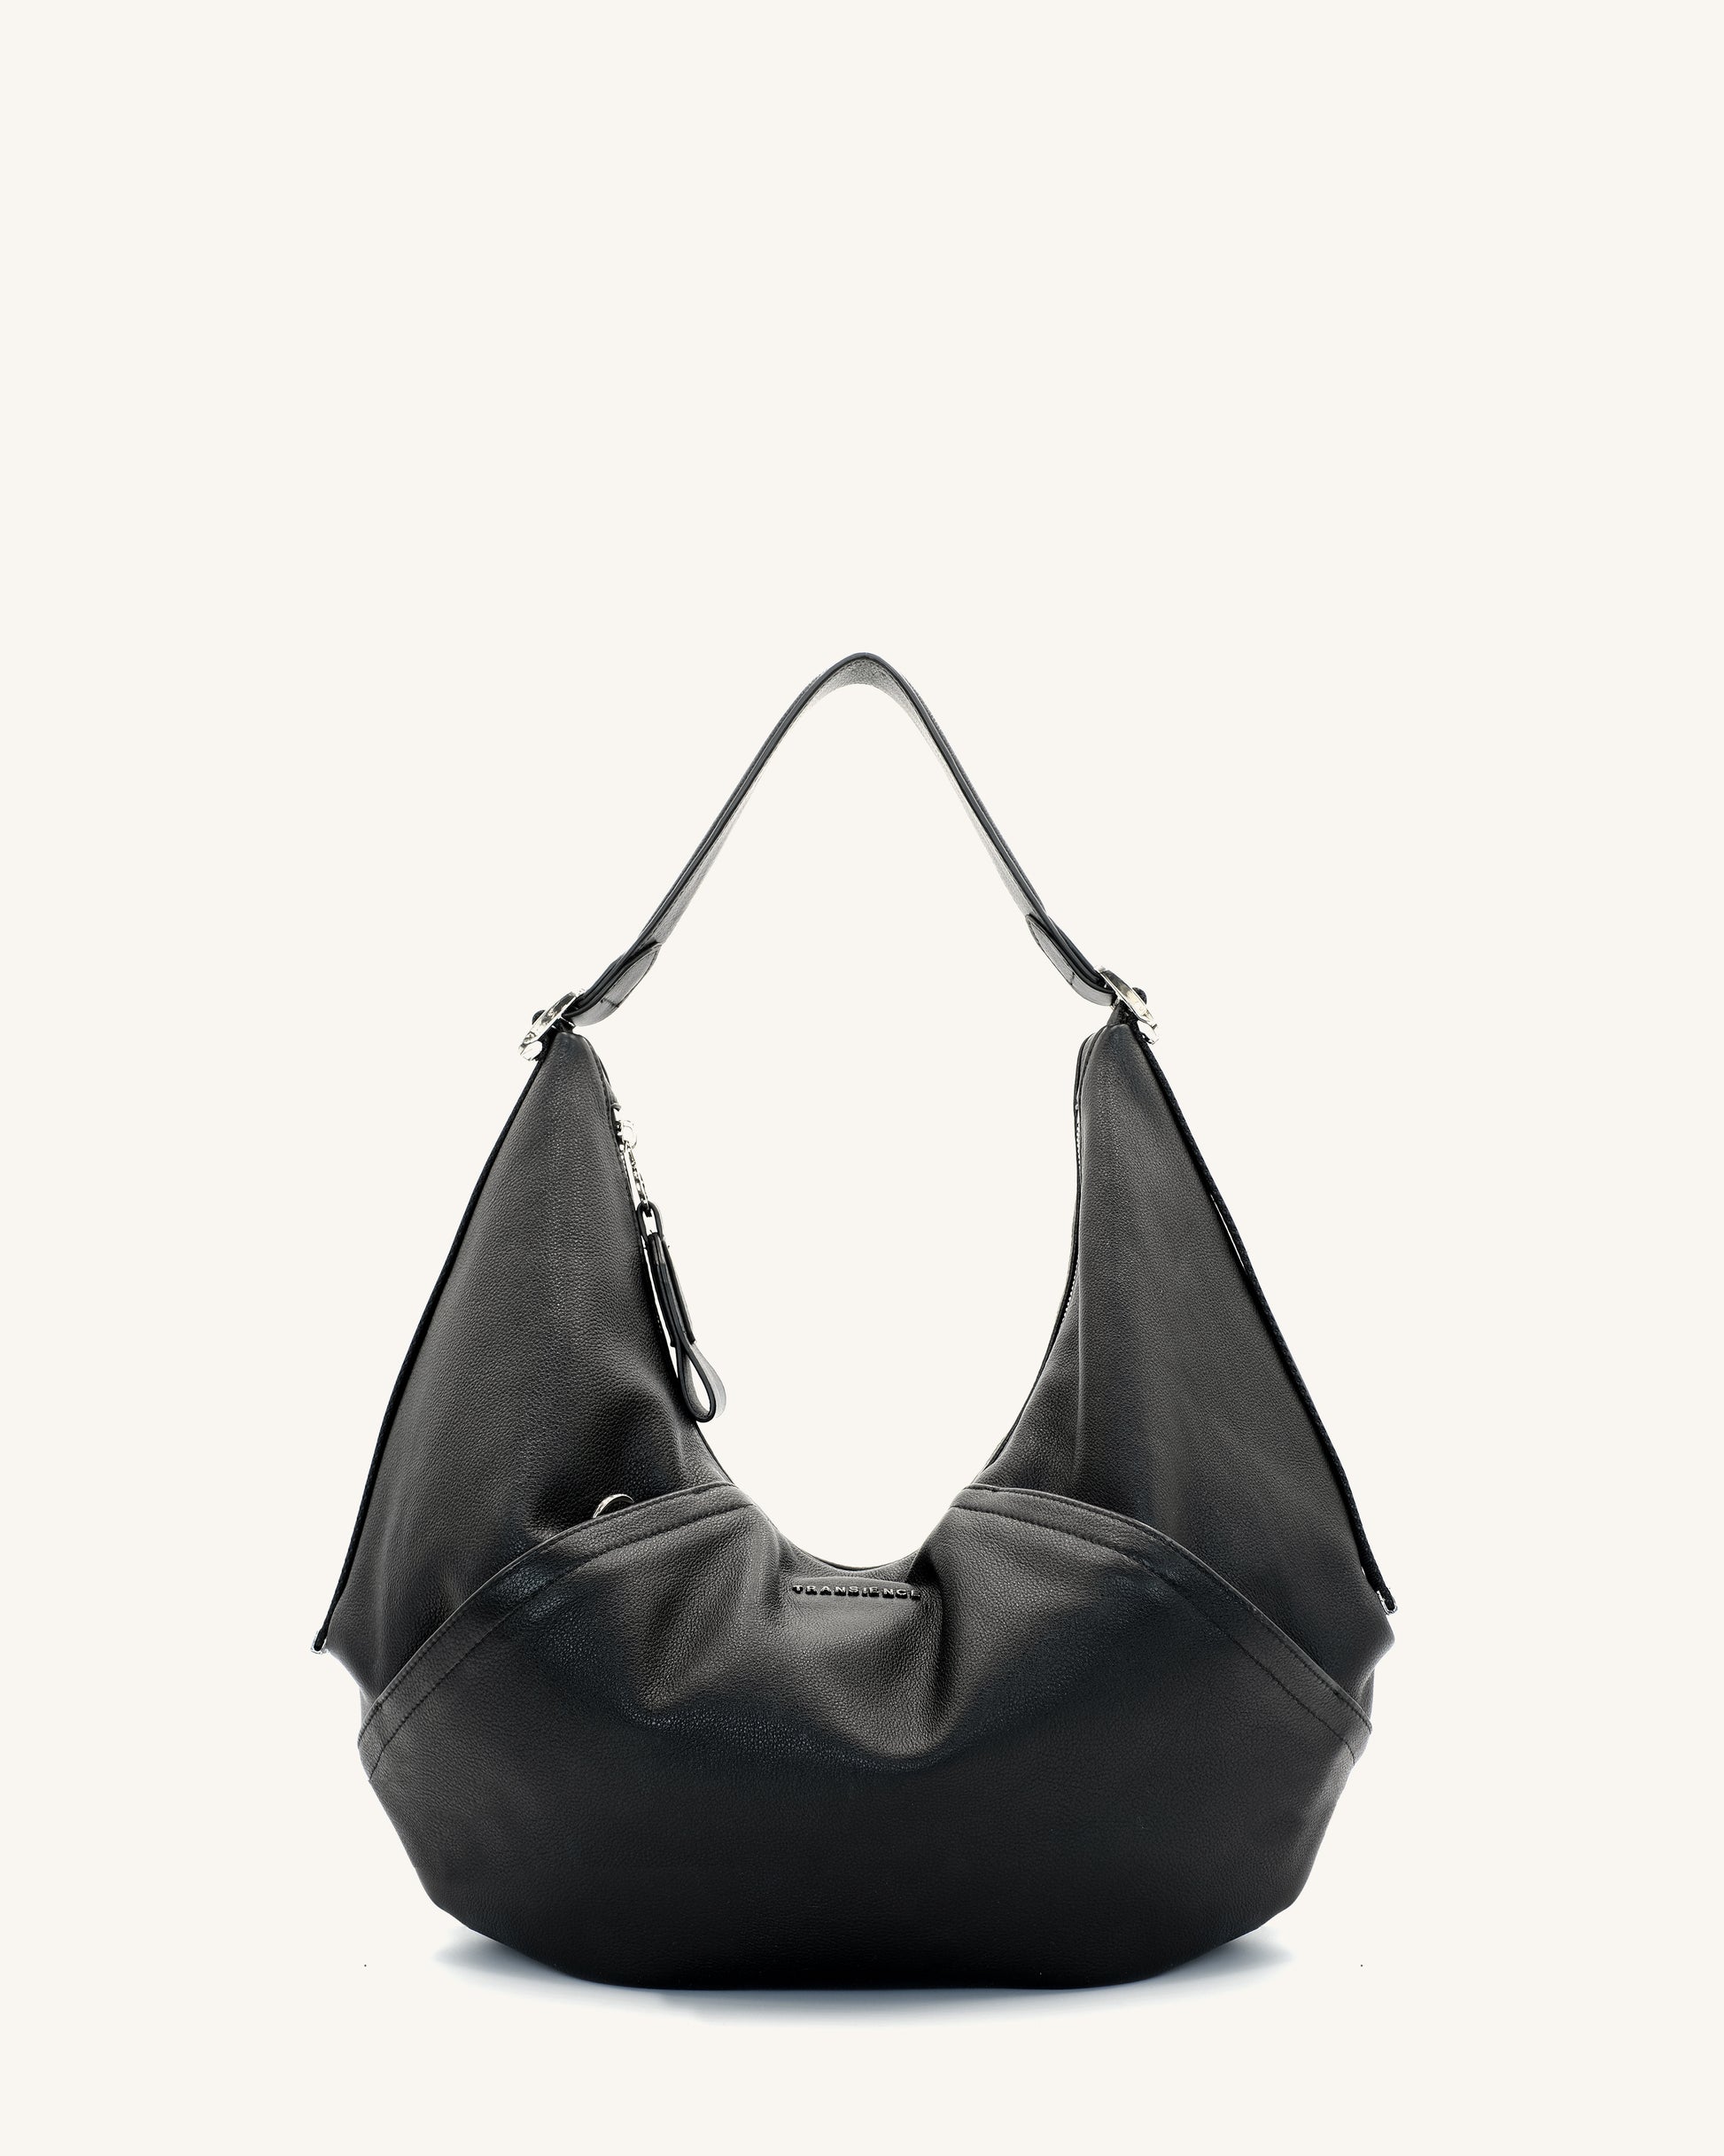 Black Pebble Leather Strap - Shoulder to Crossbody Lengths - 1